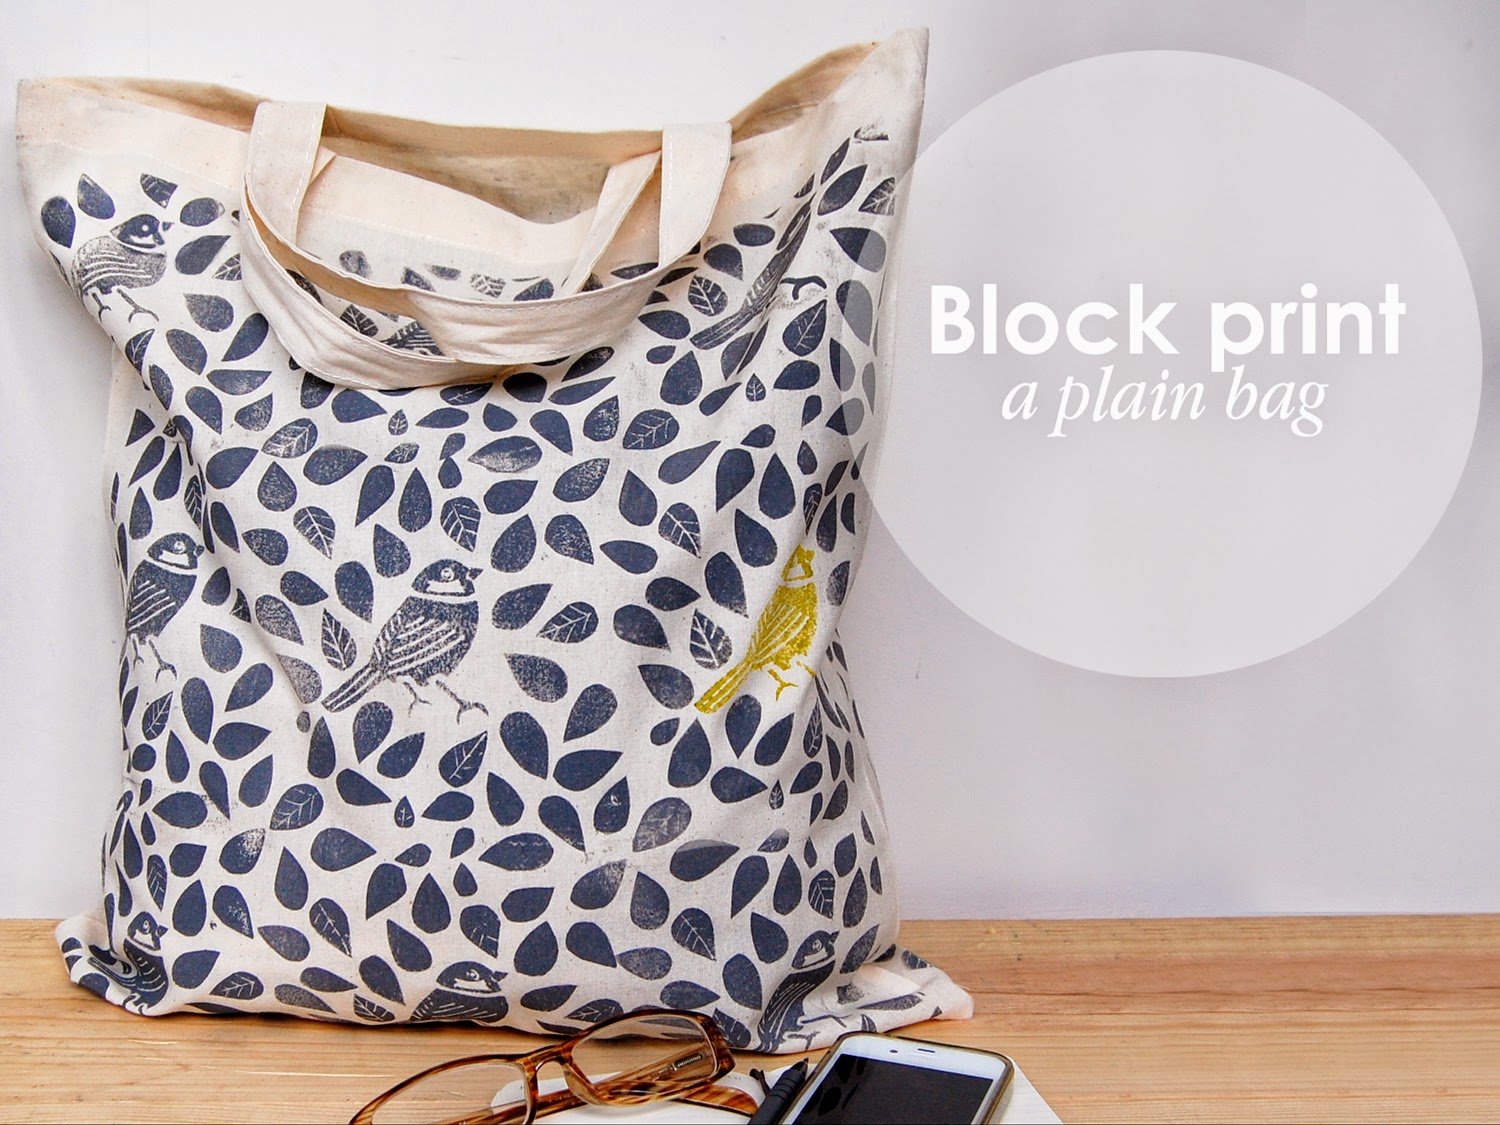 coo and co: Block print a plain bag